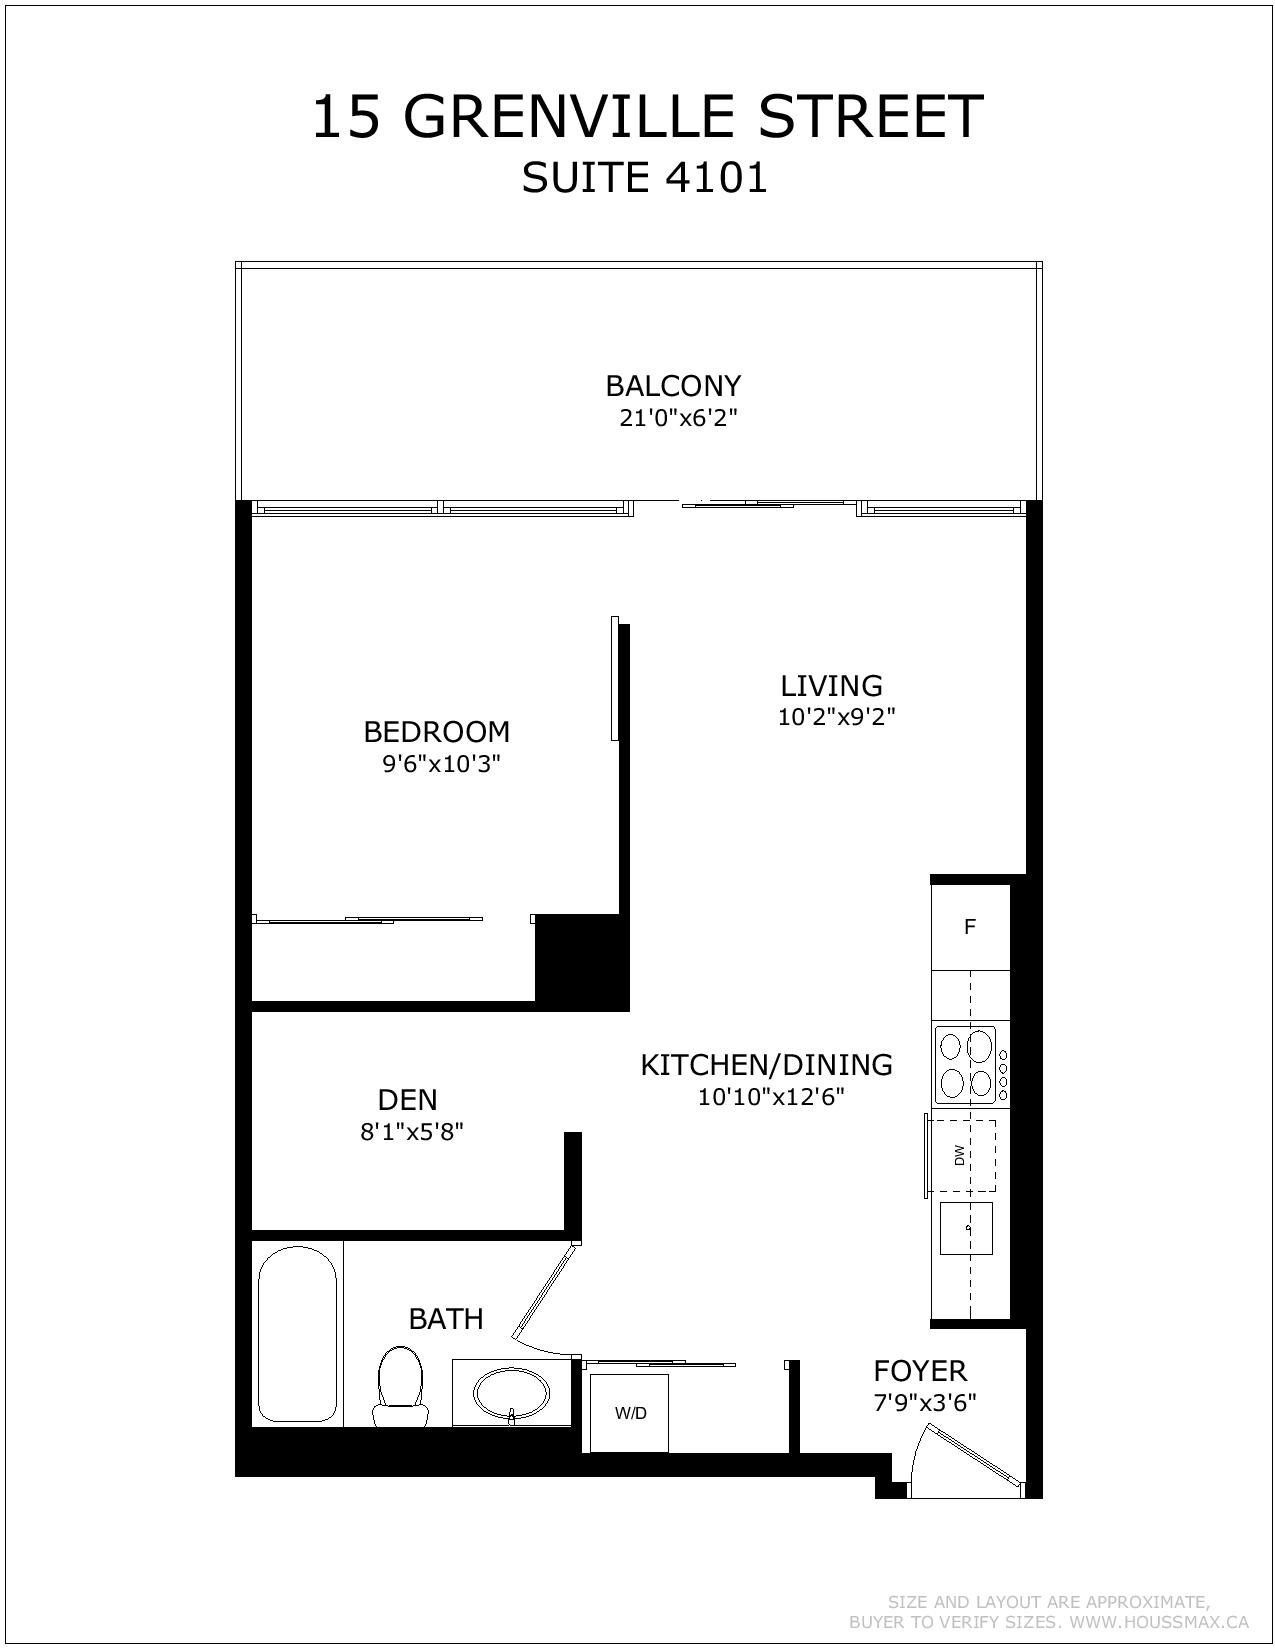 15 Grenville St - Unit 4101 - Floor Plan